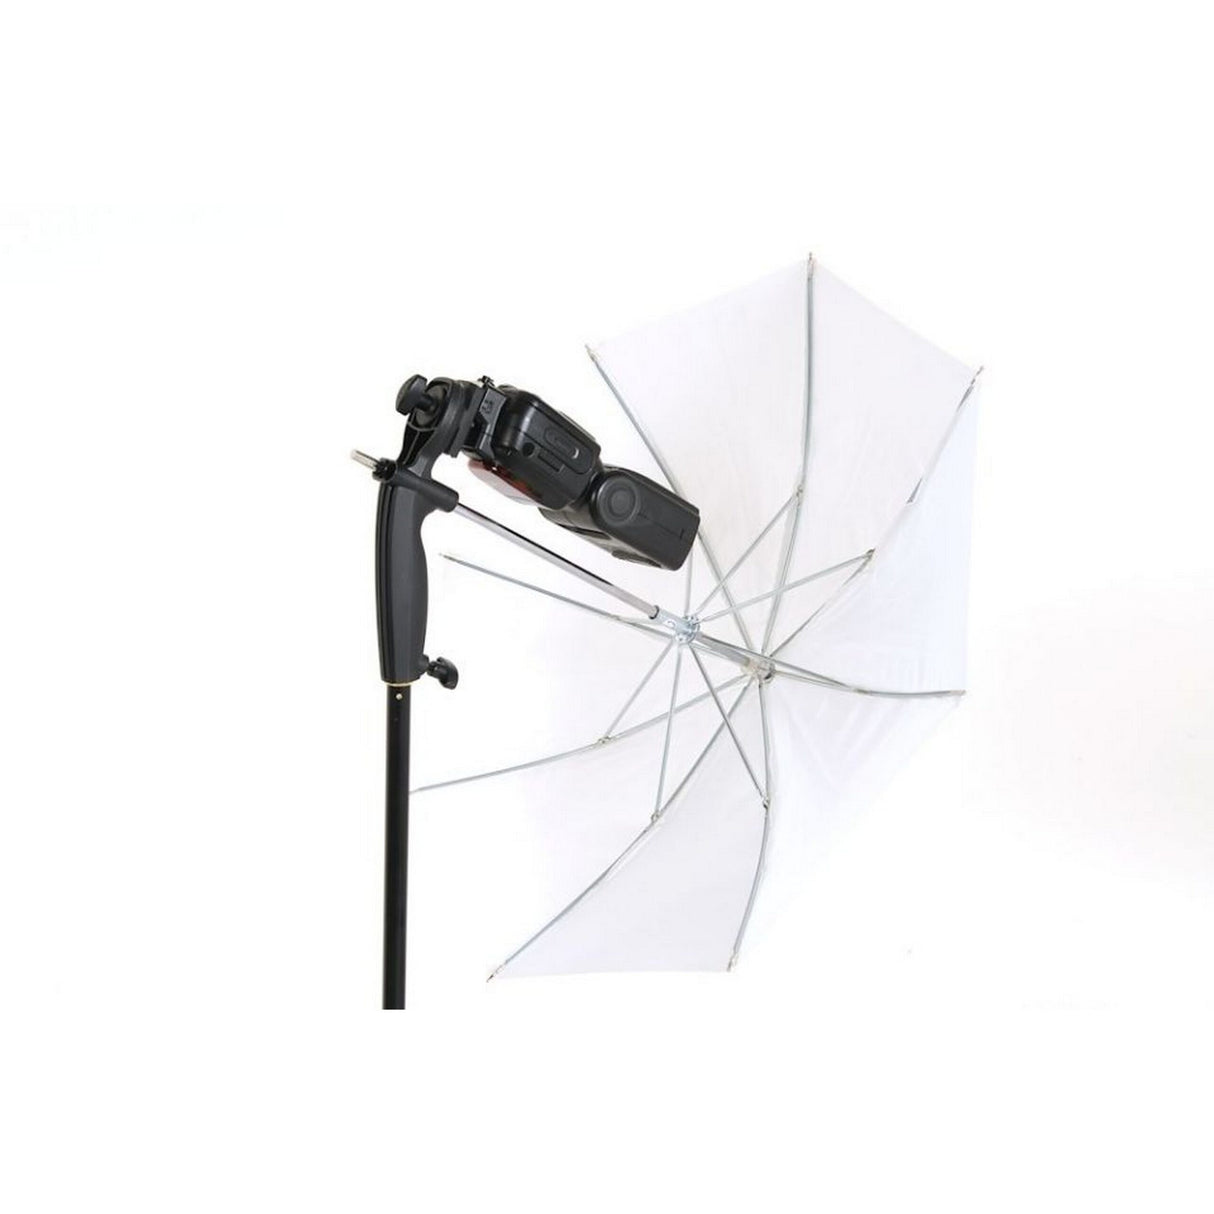 Lastolite LL LU2126 Brolly Grip with 20 Inch Translucent Umbrella